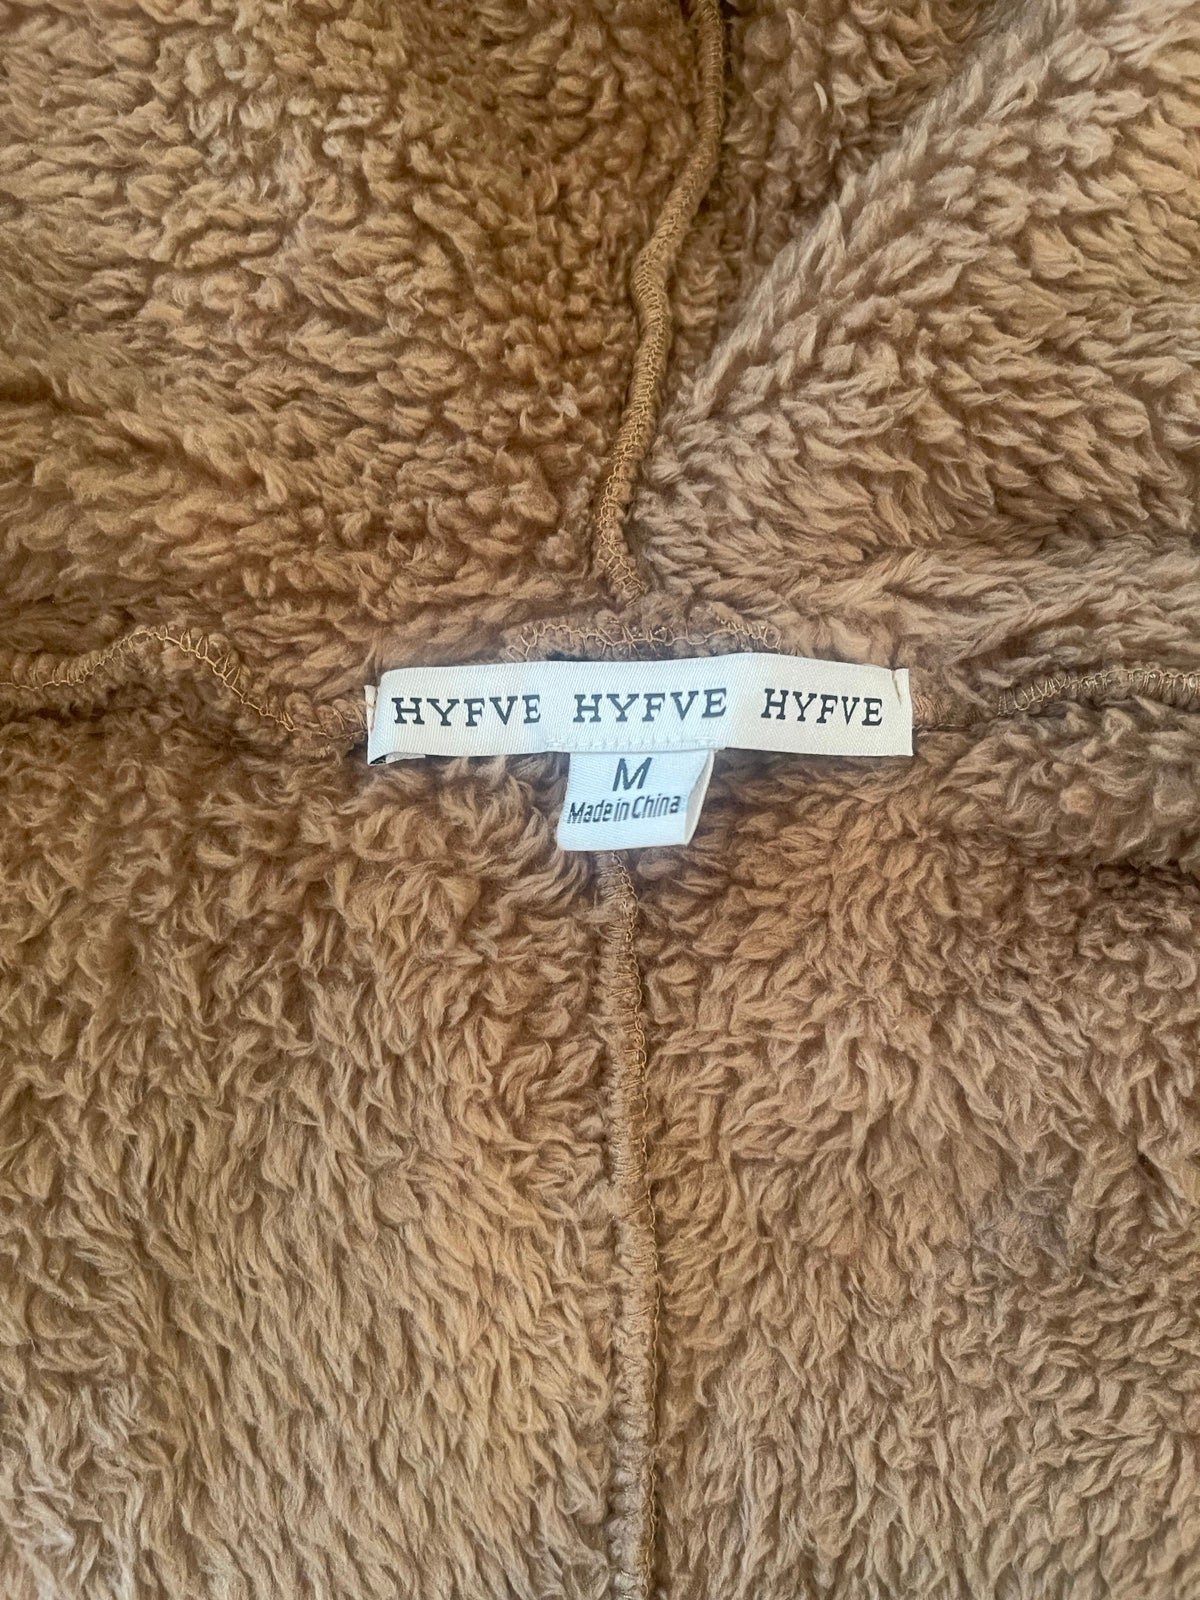 Classic HYFVE HYFVE HYVE Sherpa Fleece Jacket Medium hKMeXJhUL just for you